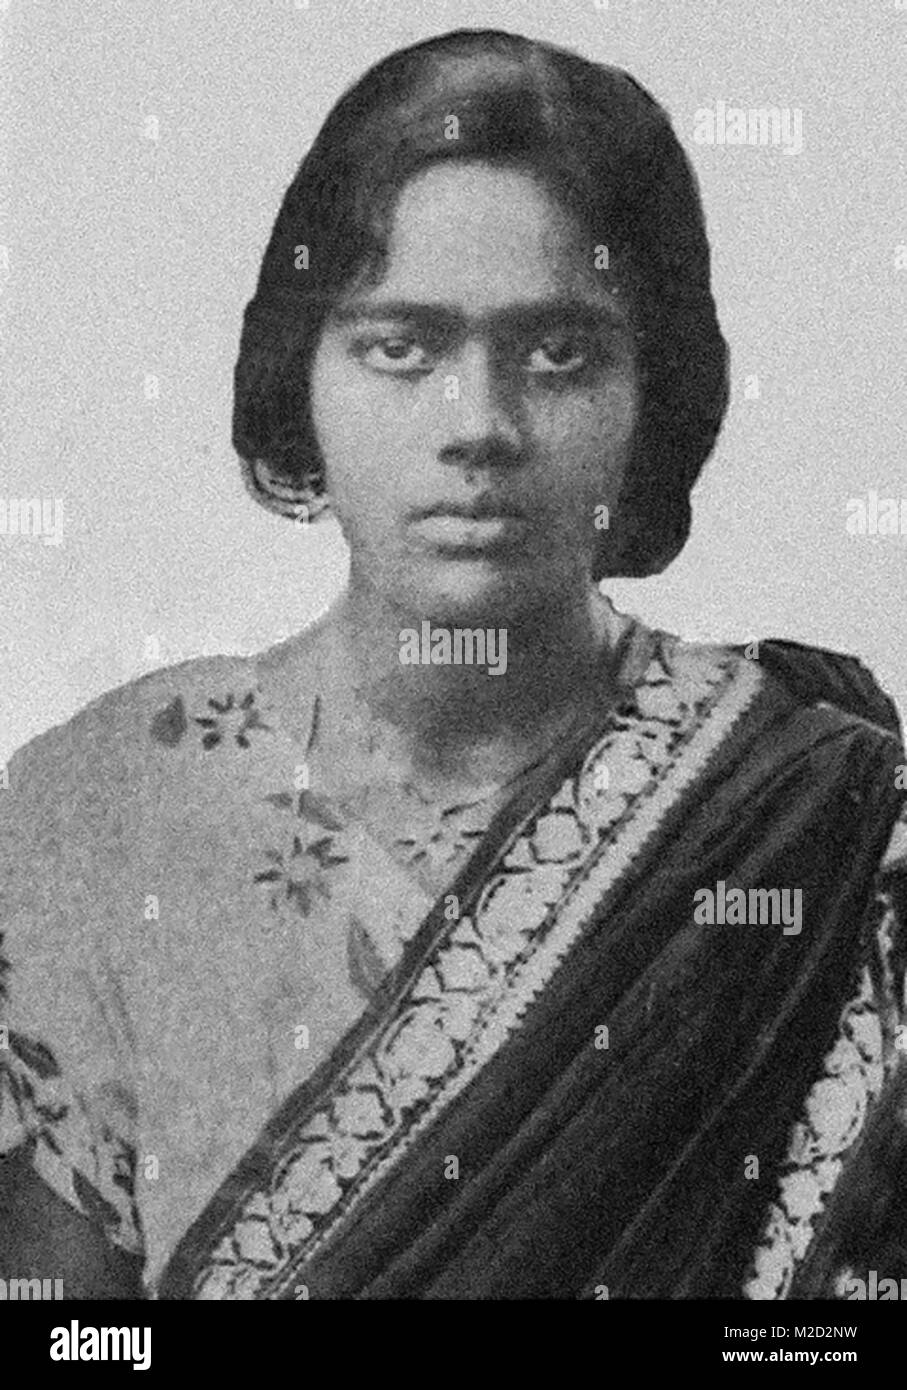 Bengali Black and White Stock Photos & Images - Alamy